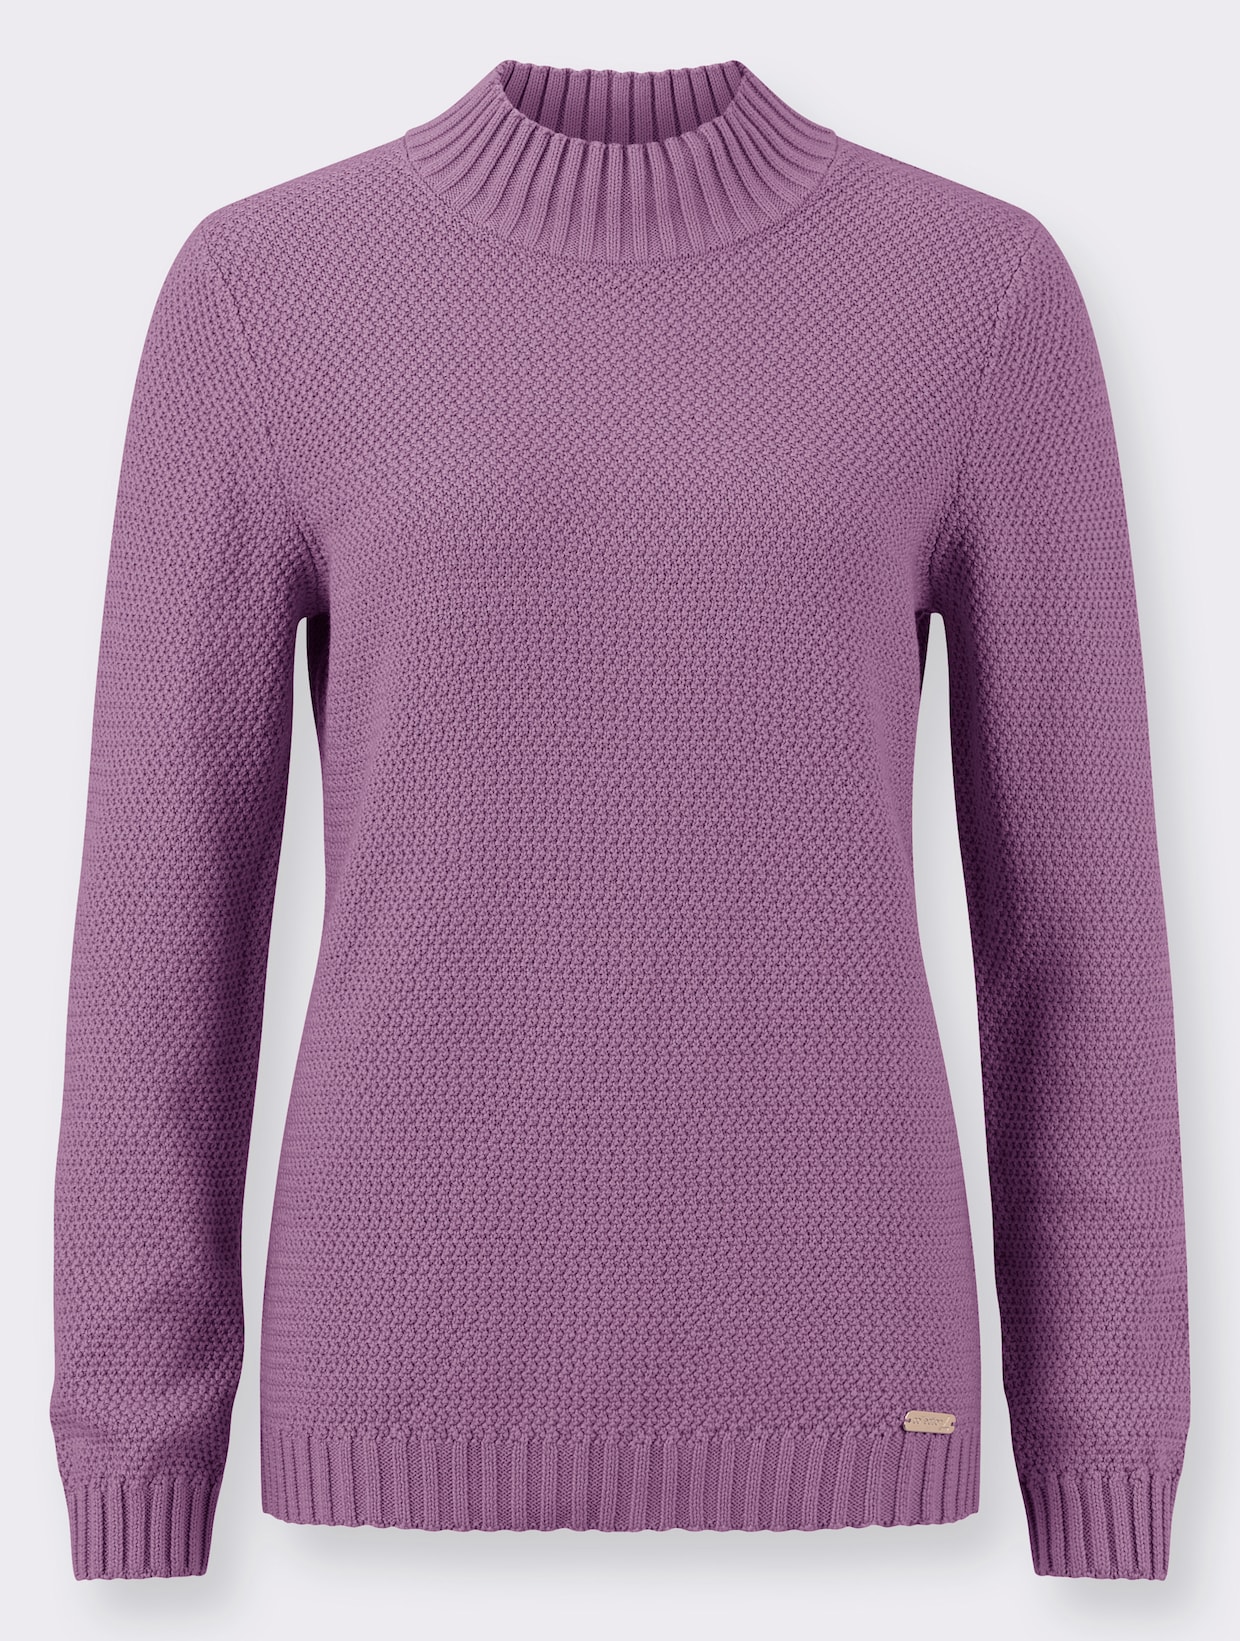 Pullover met lange mouwen - violet